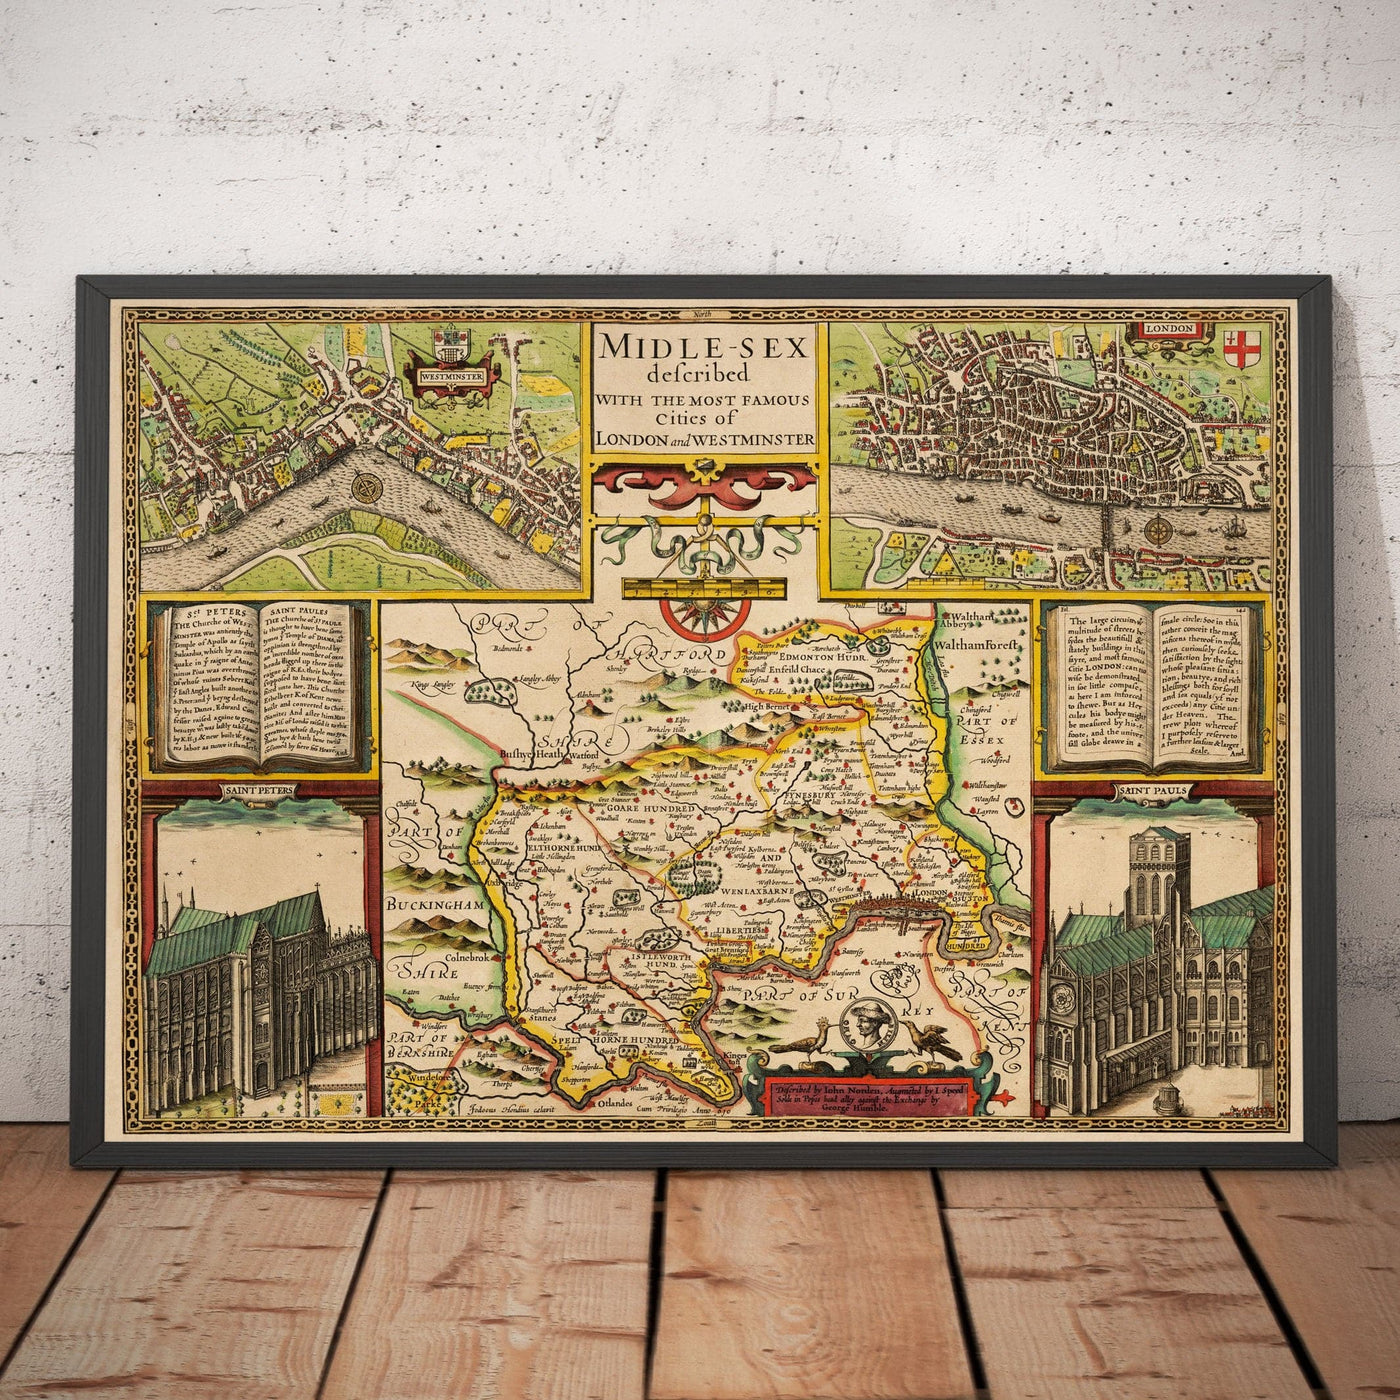 Mapa antiguo de Middlesex en 1611 por John Speed ​​- West London, North London, Westminster